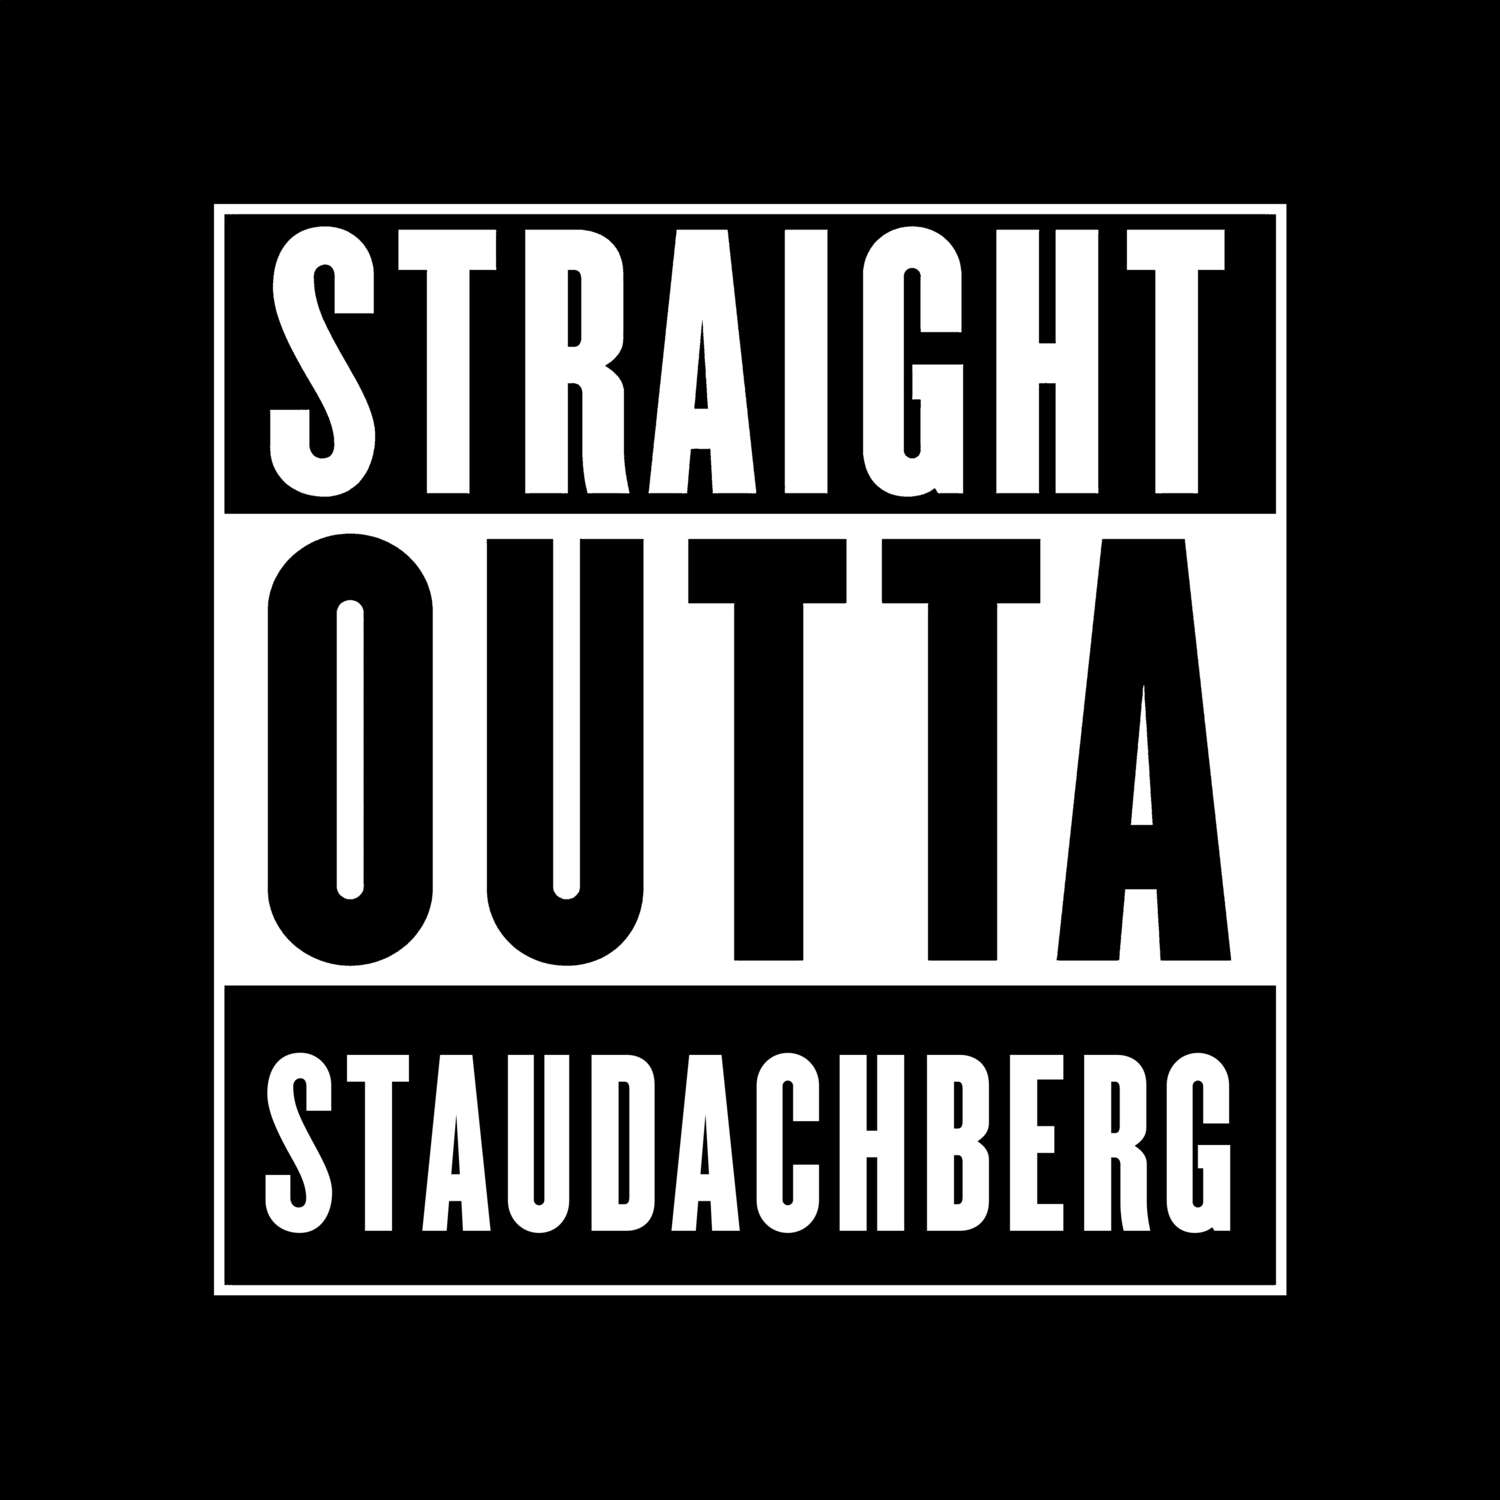 Staudachberg T-Shirt »Straight Outta«